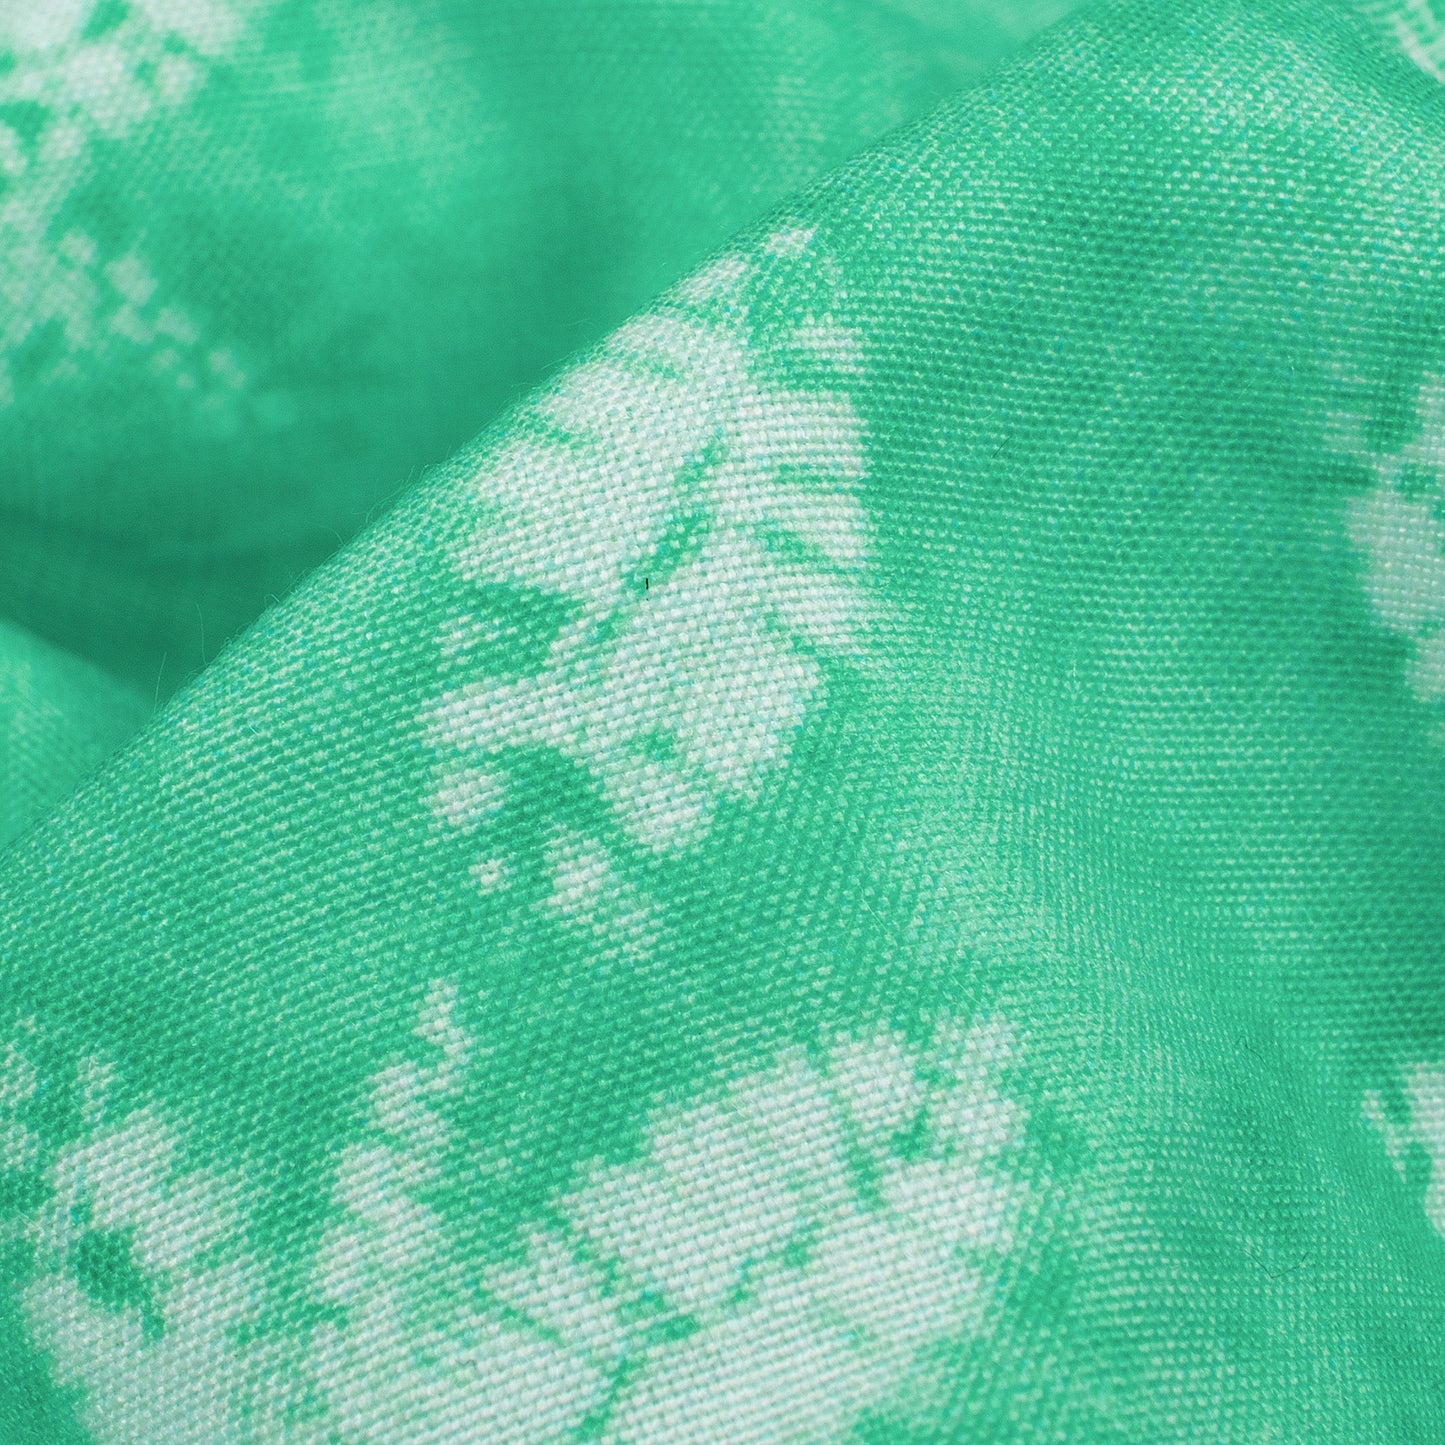 Seafoam Green And White Leaf Pattern Digital Print Muslin Fabric